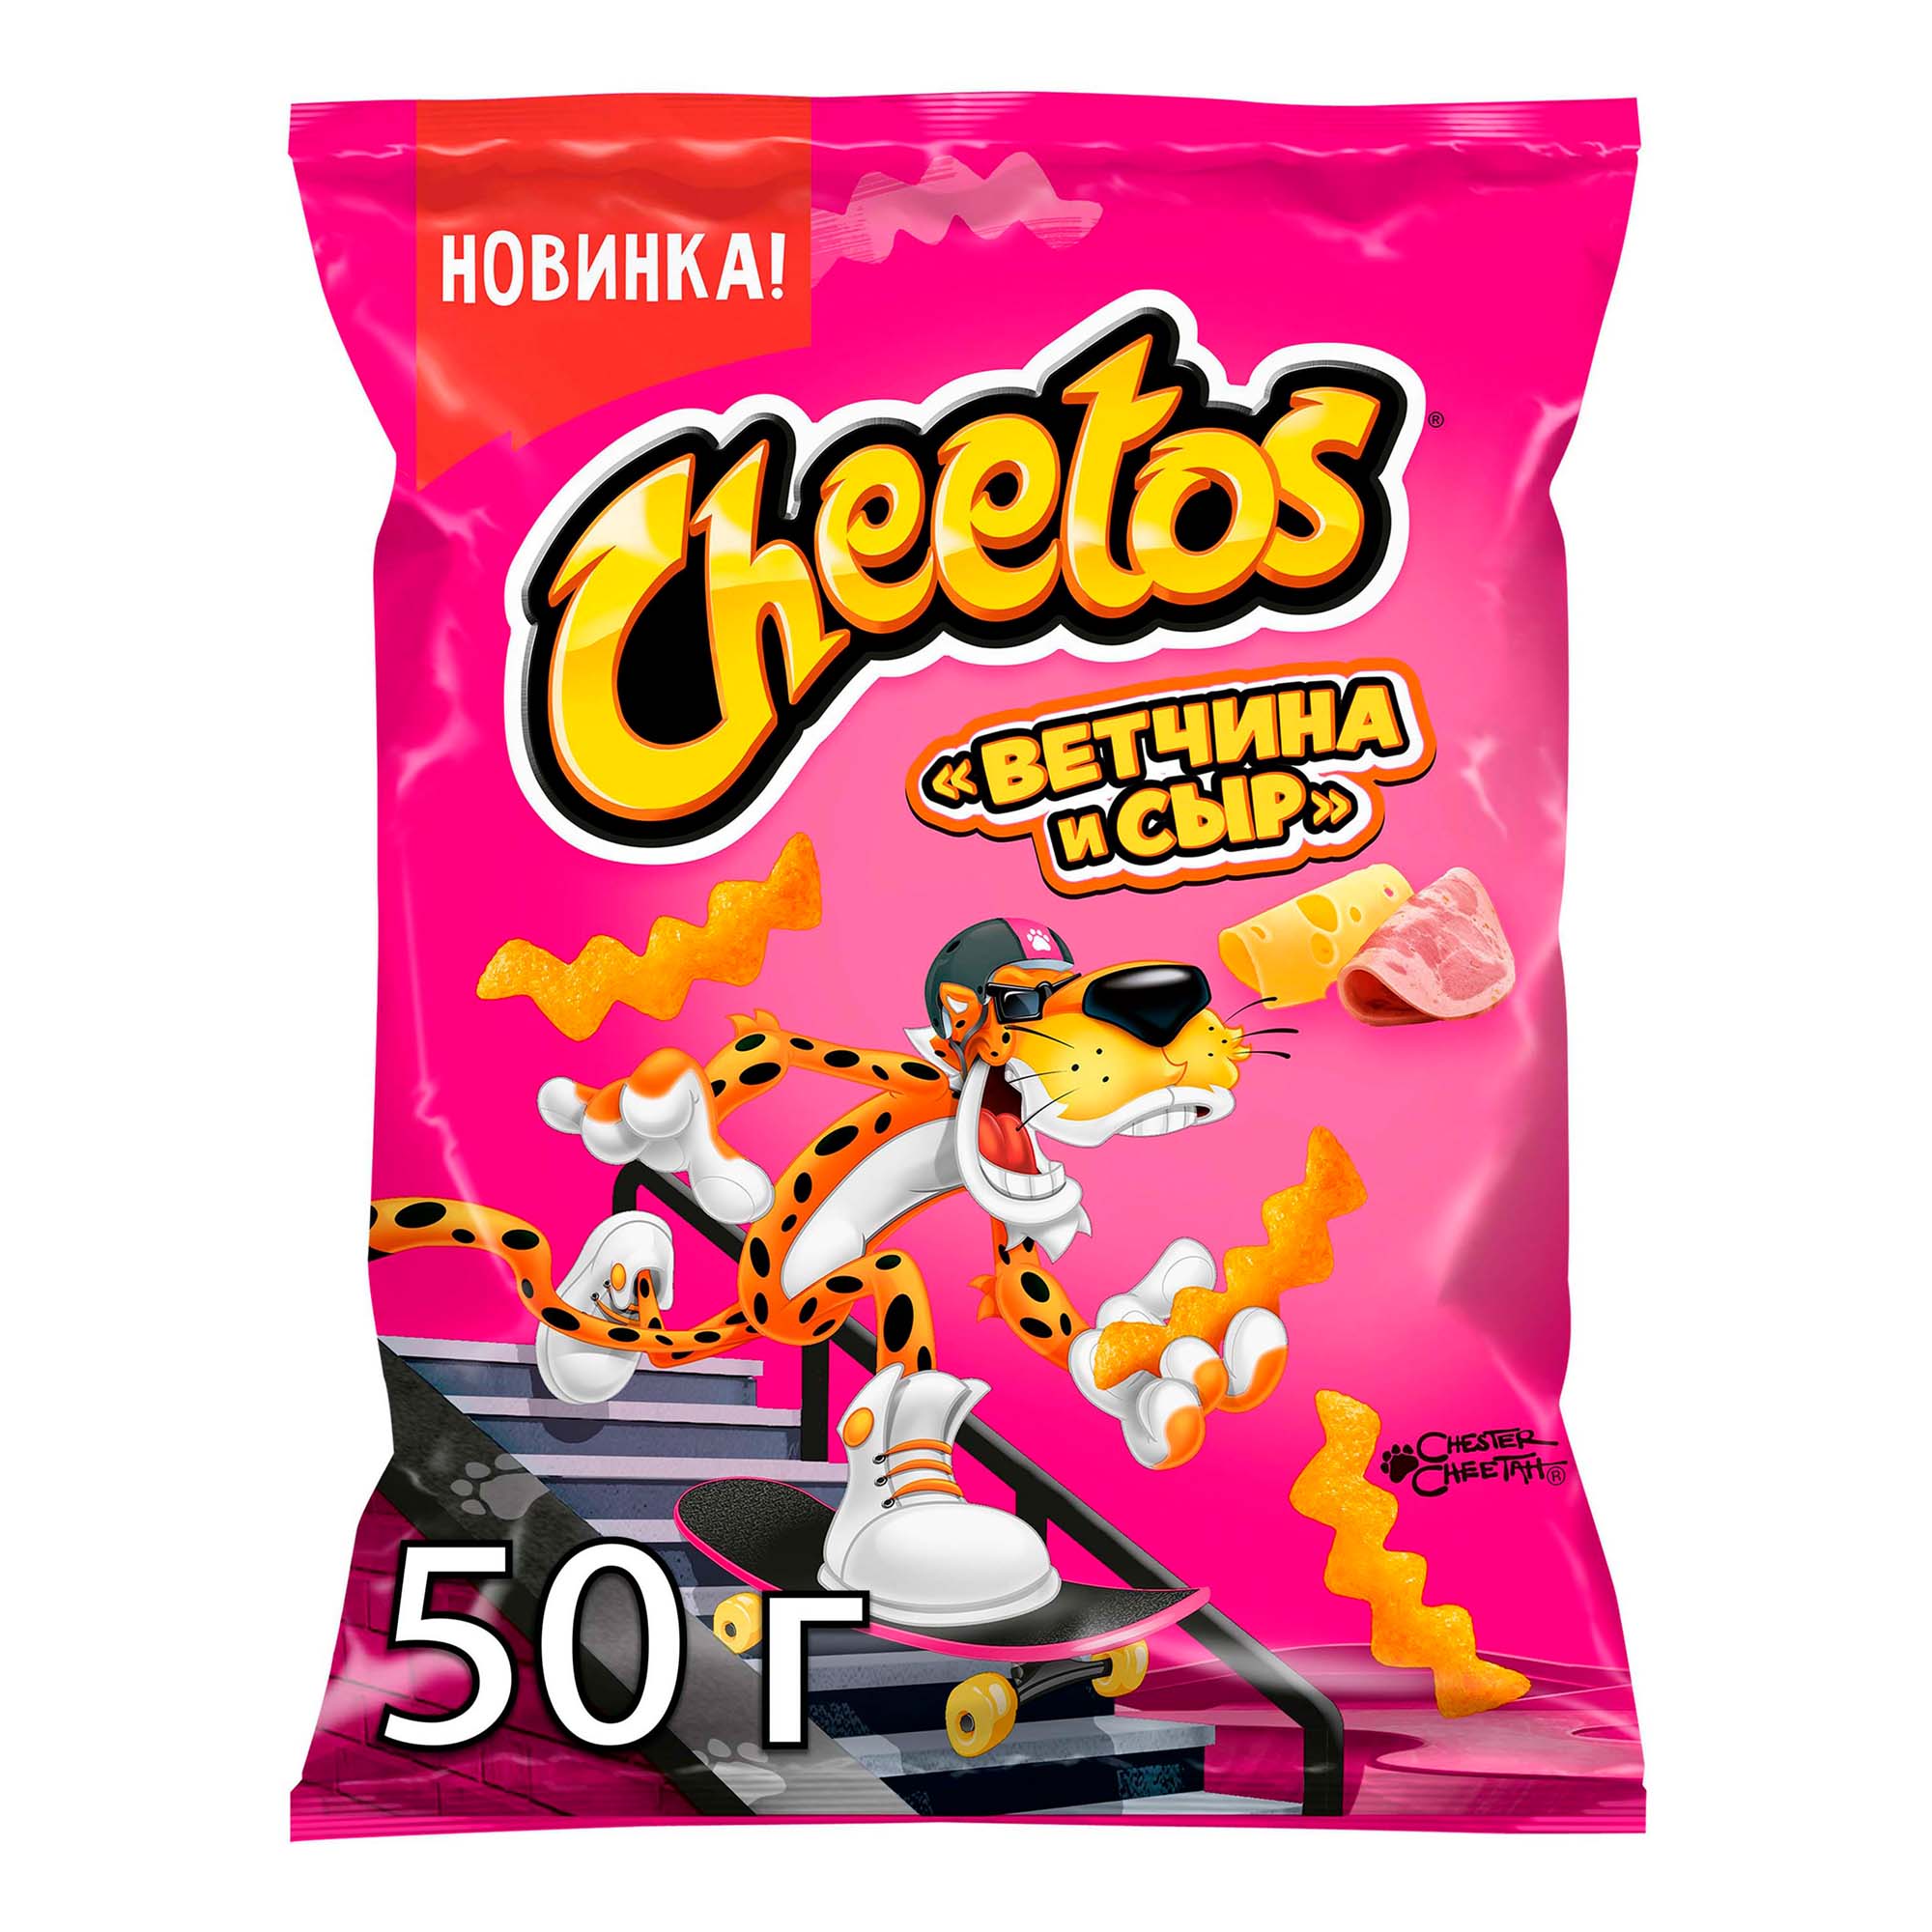 Снеки кукурузные Cheetos ветчина-сыр 50 г